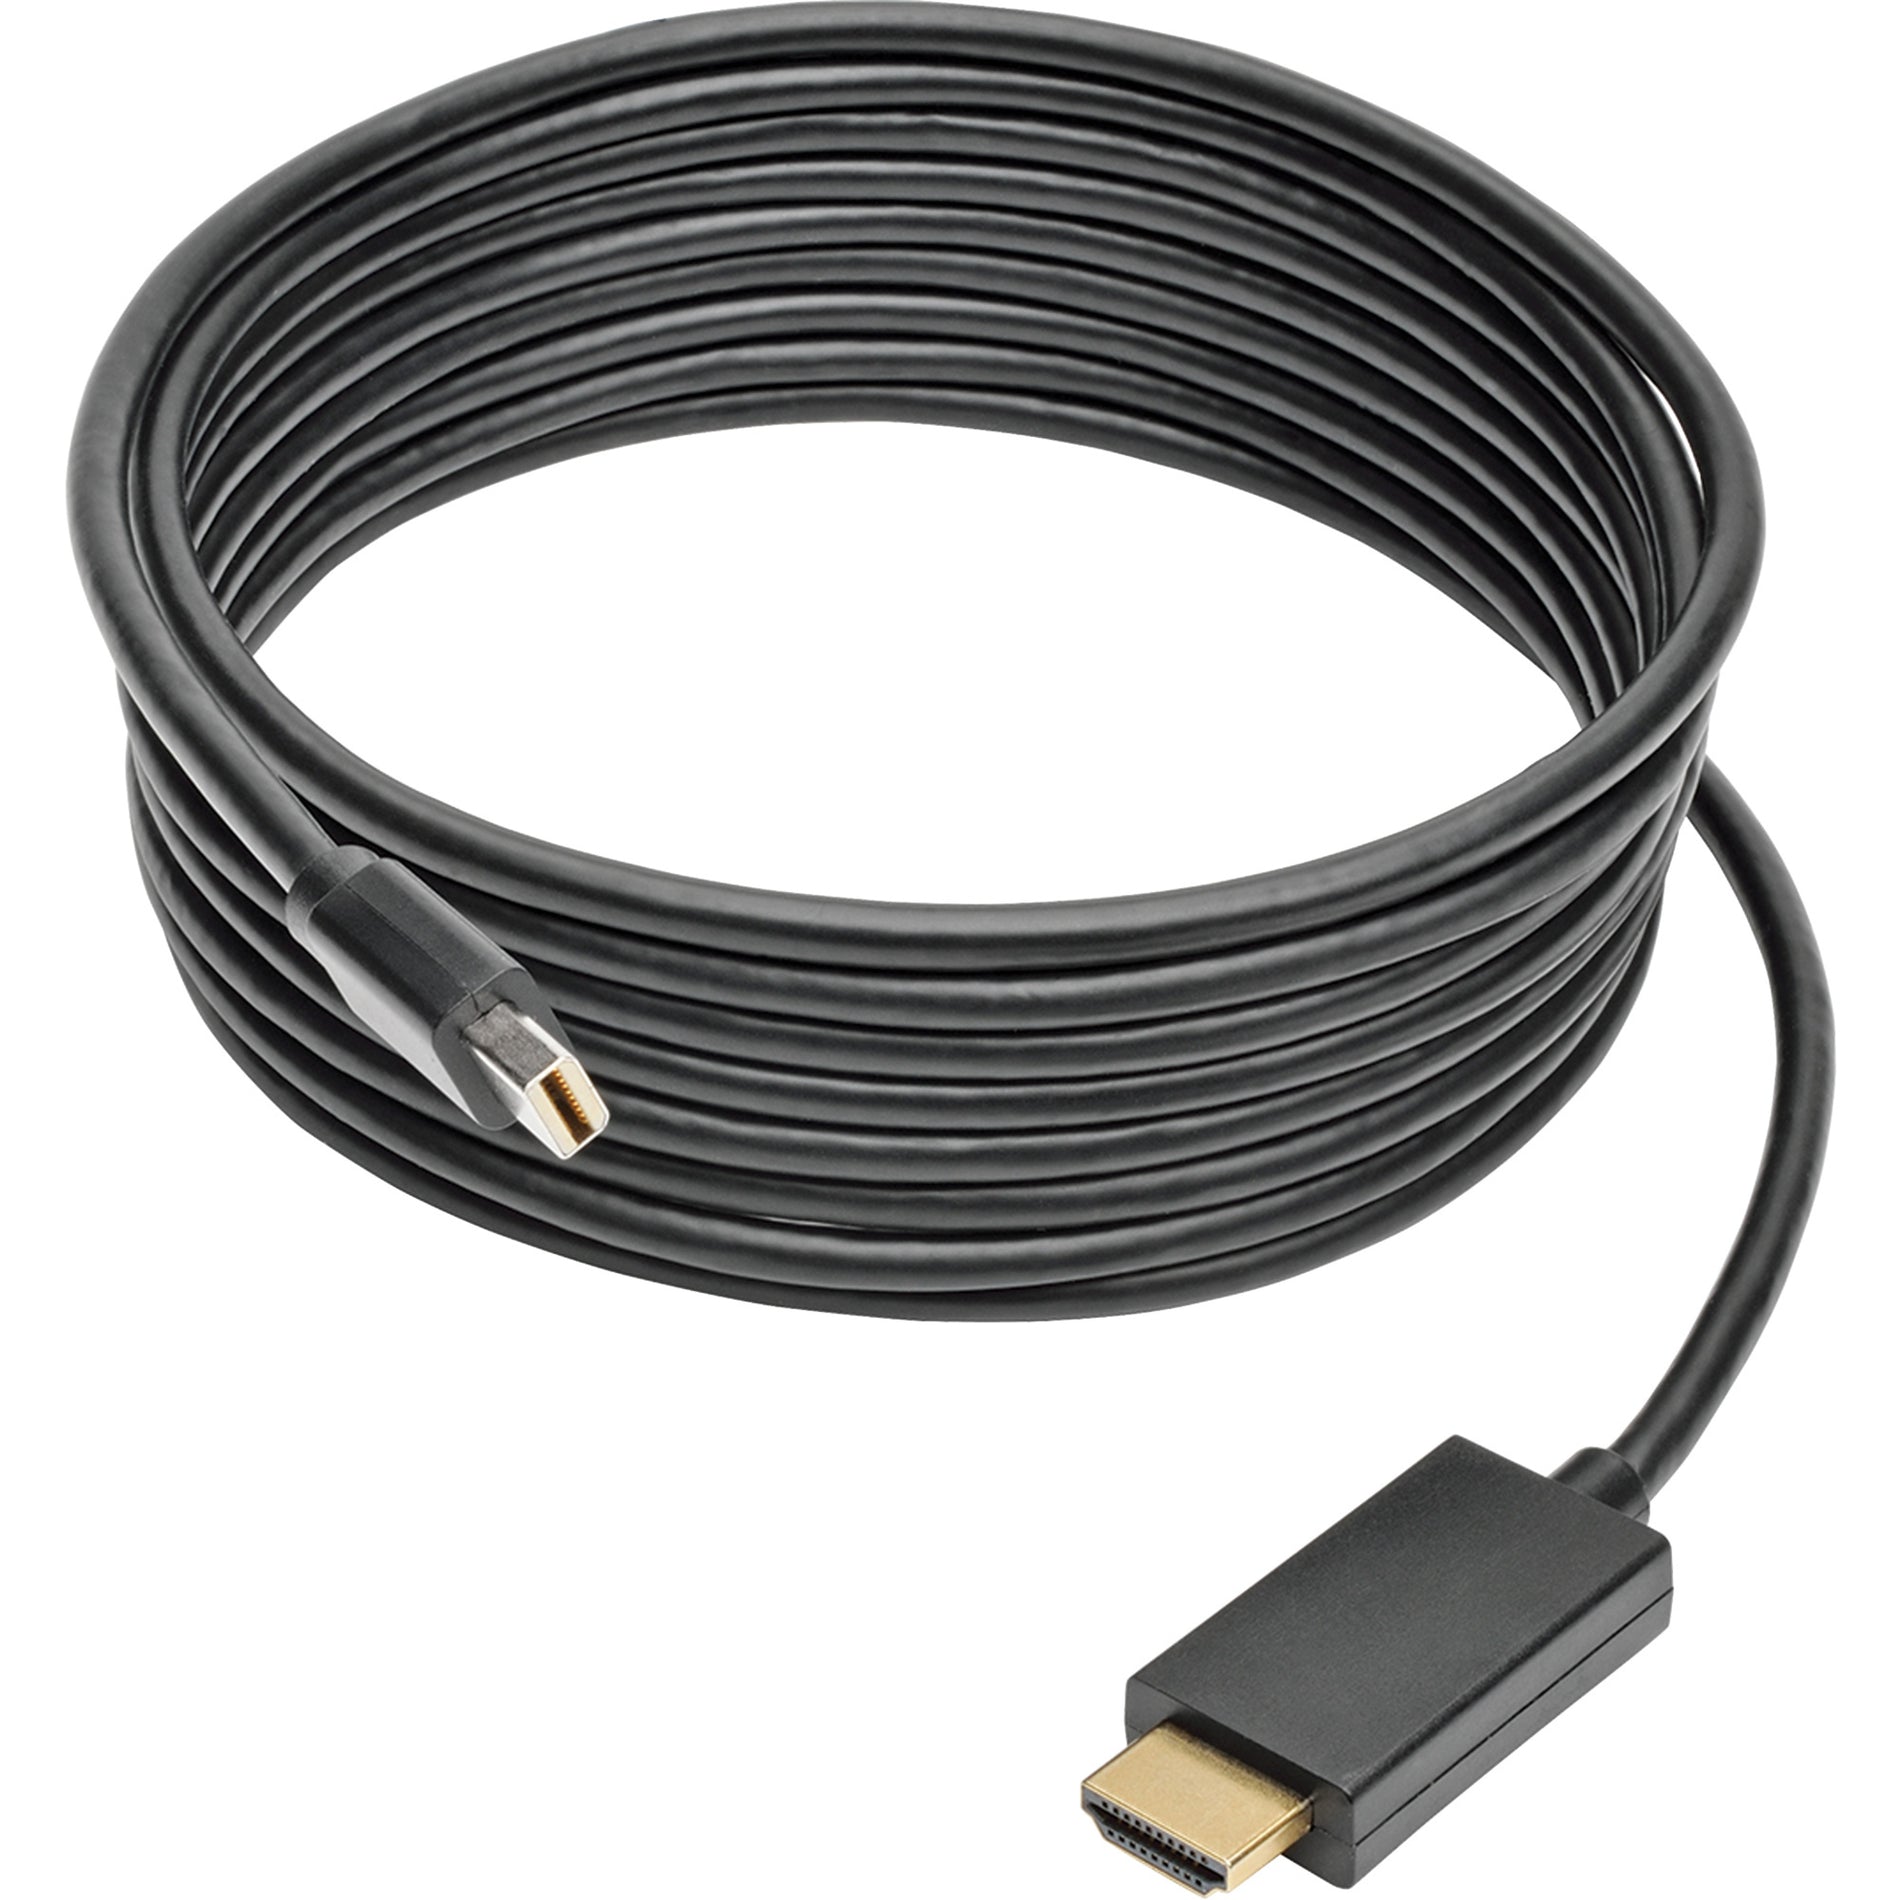 Tripp Lite P586-006-HDMI Mini DisplayPort to HD Cable Adapter, 6ft, Black